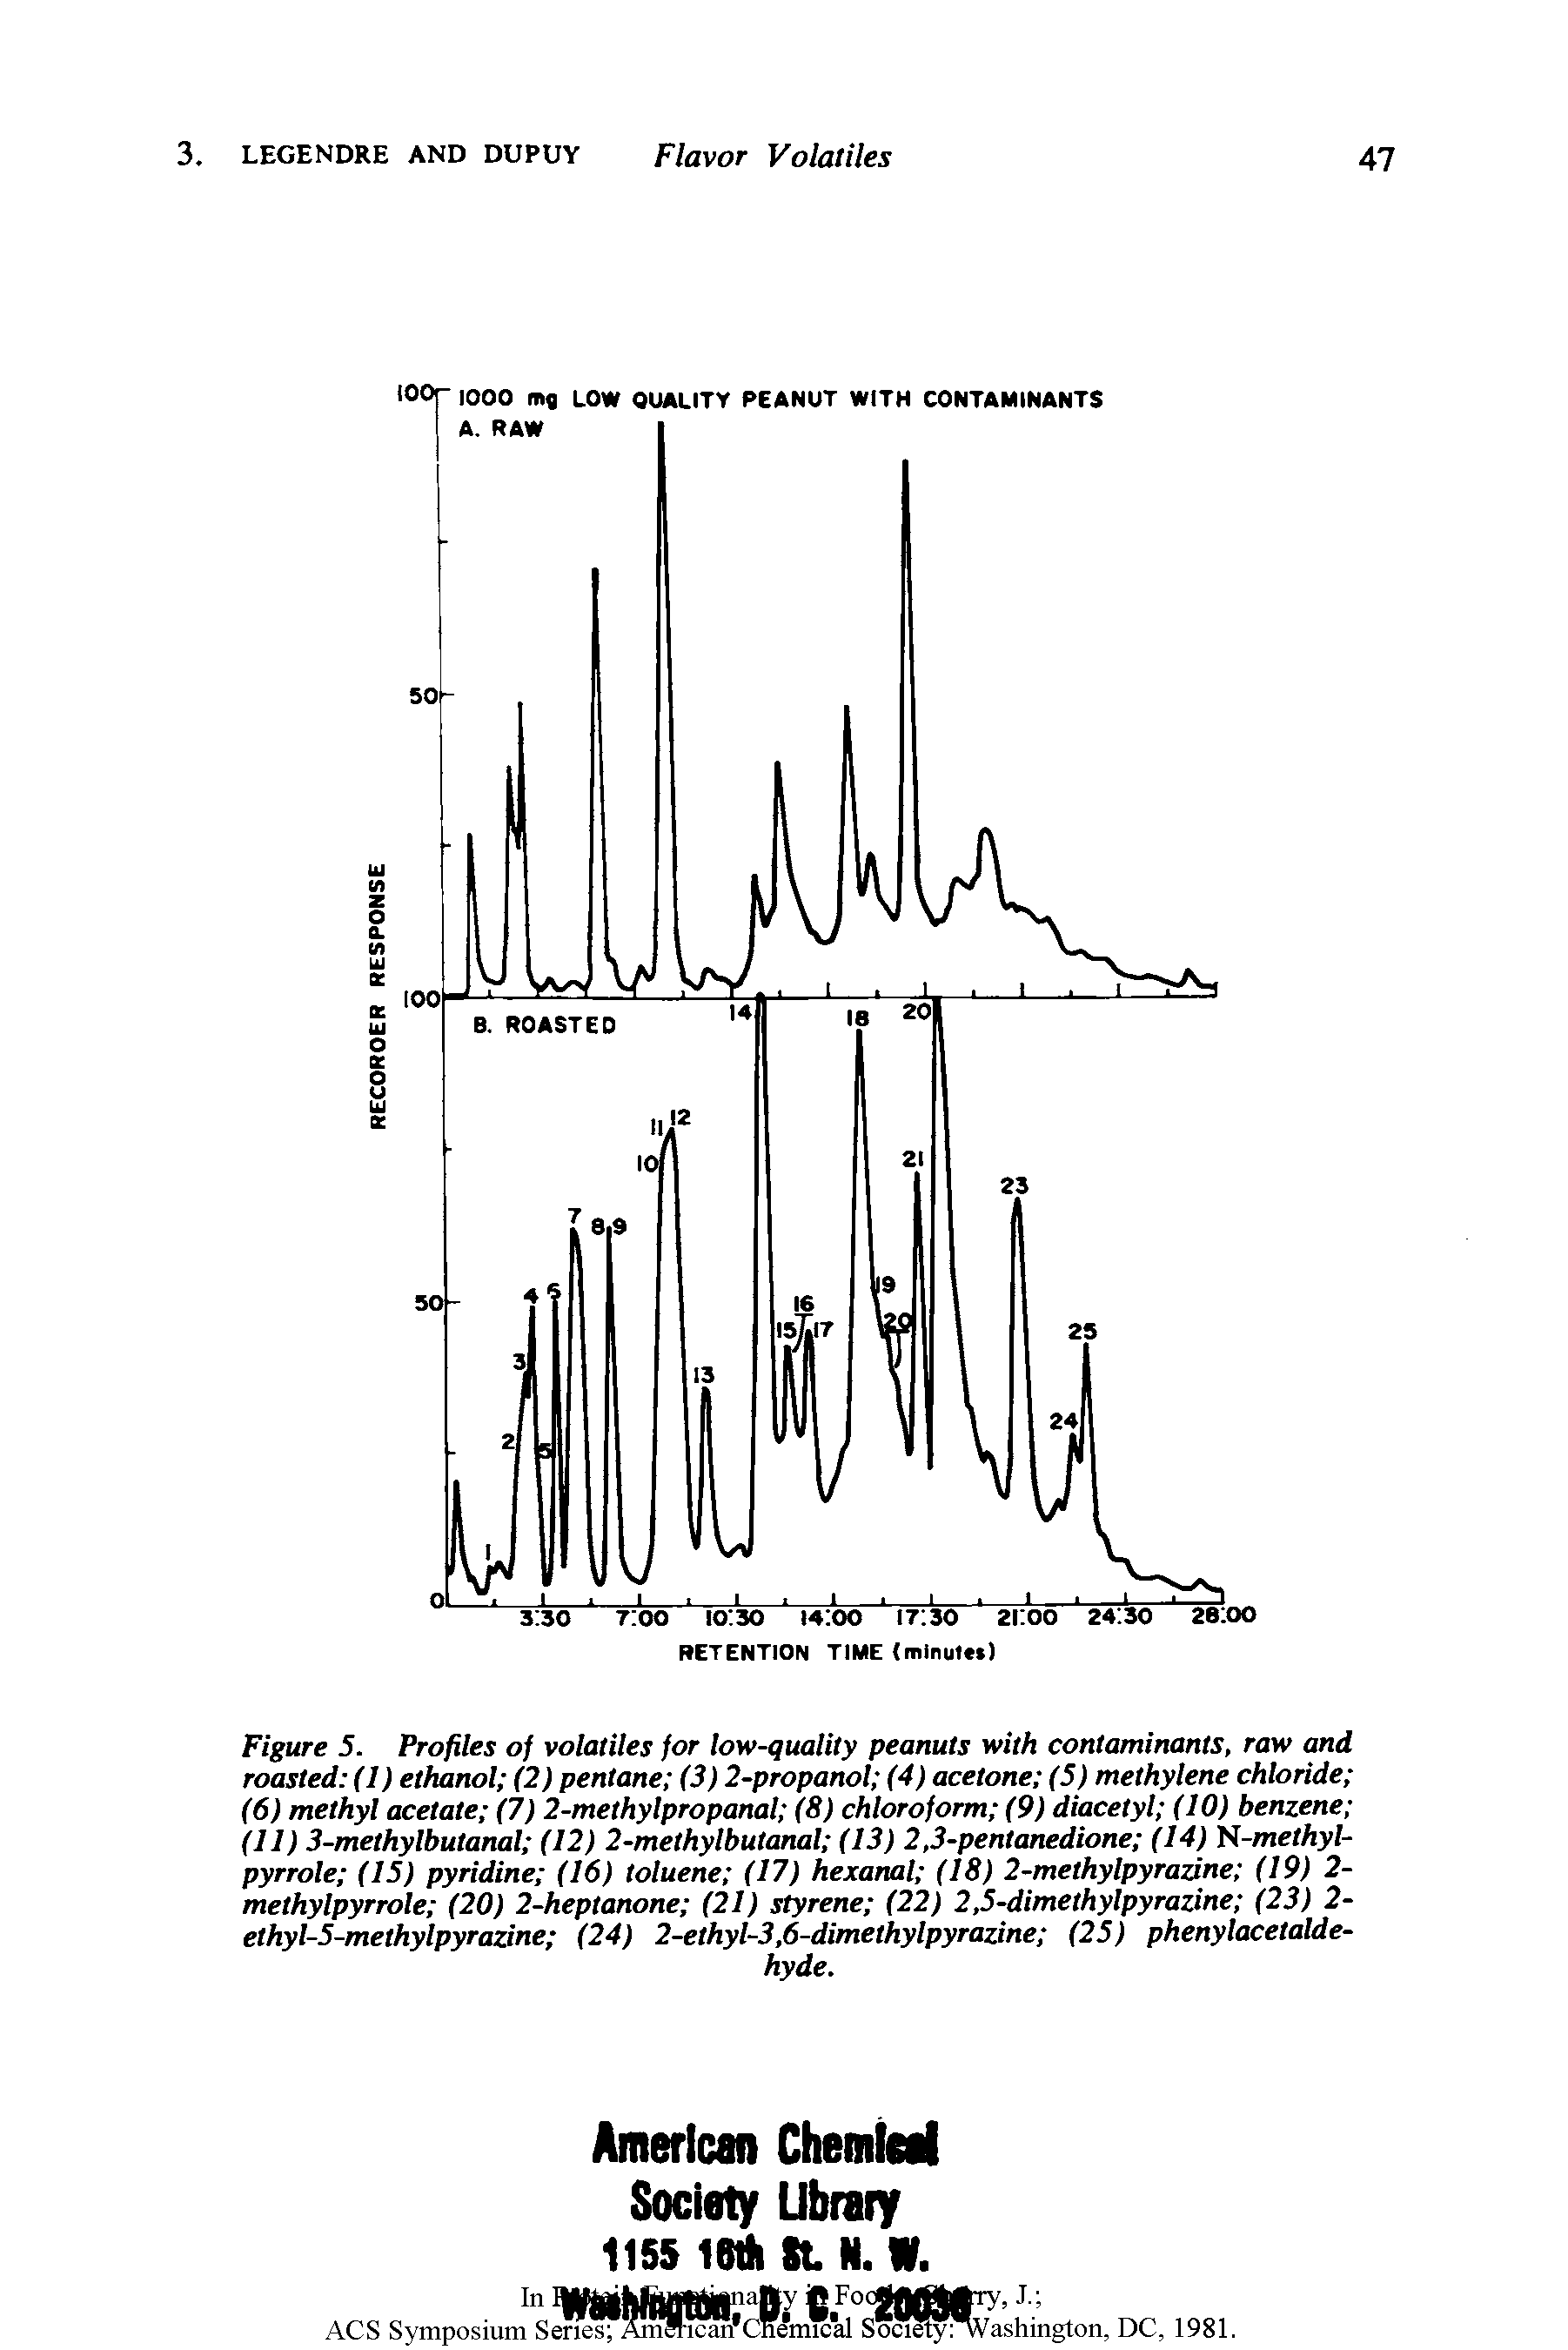 Figure 5. Profiles of volatiles for low-quality peanuts with contaminants, raw and roasted (I) ethanol (2) pentane (3) 2-propanol (4) acetone (5) methylene chloride (6) methyl acetate (7) 2-methylpropanal (8) chloroform (9) diacetyl (10) benzene (11) 3-methylbutanal (12) 2-methylbutanal (13) 2,3-pentanedione (14) fl-methyl-pyrrole (15) pyridine (16) toluene (17) hexanal (18) 2-methylpyrazine (19) 2-methylpyrrole (20) 2-heptanone (21) styrene (22) 2,5-dimethylpyrazine (23) 2-ethyl-5-methylpyrazine (24) 2-ethyl-3,6-dimethylpyrazine (25) phenylacetalde-hyde.